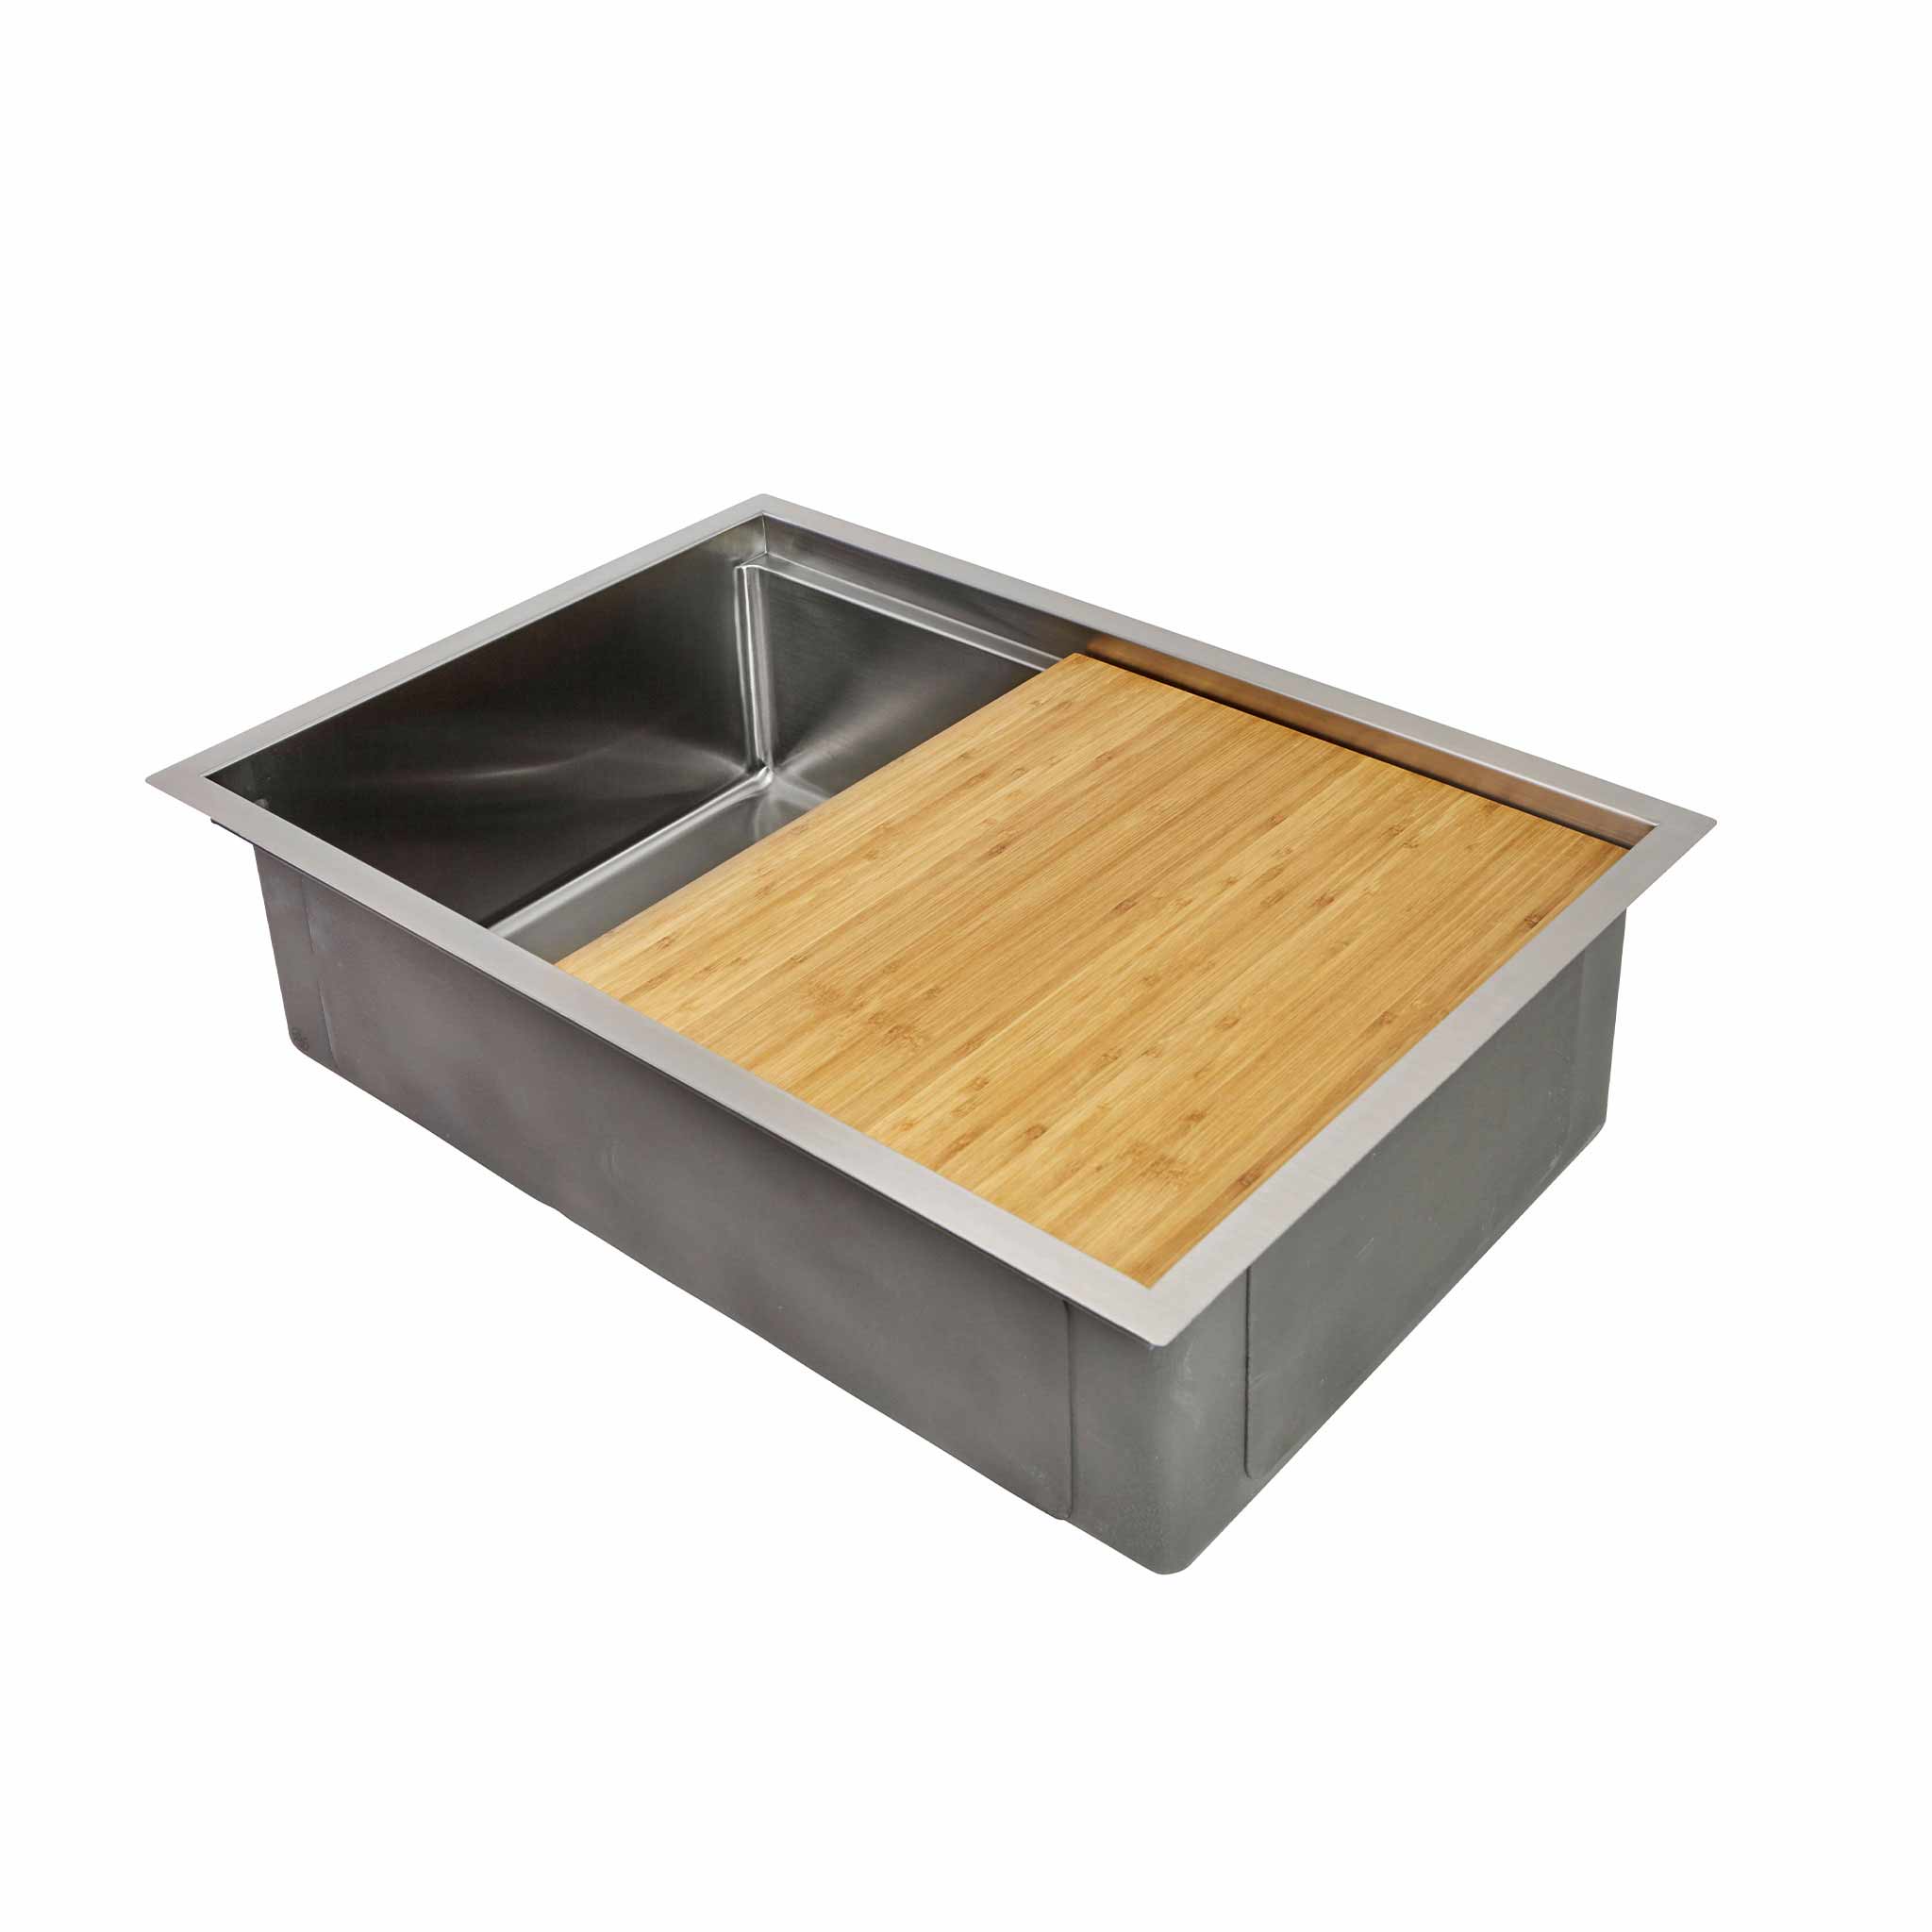 Bamboo workstation cutting board in a 28” Create Good Sink.